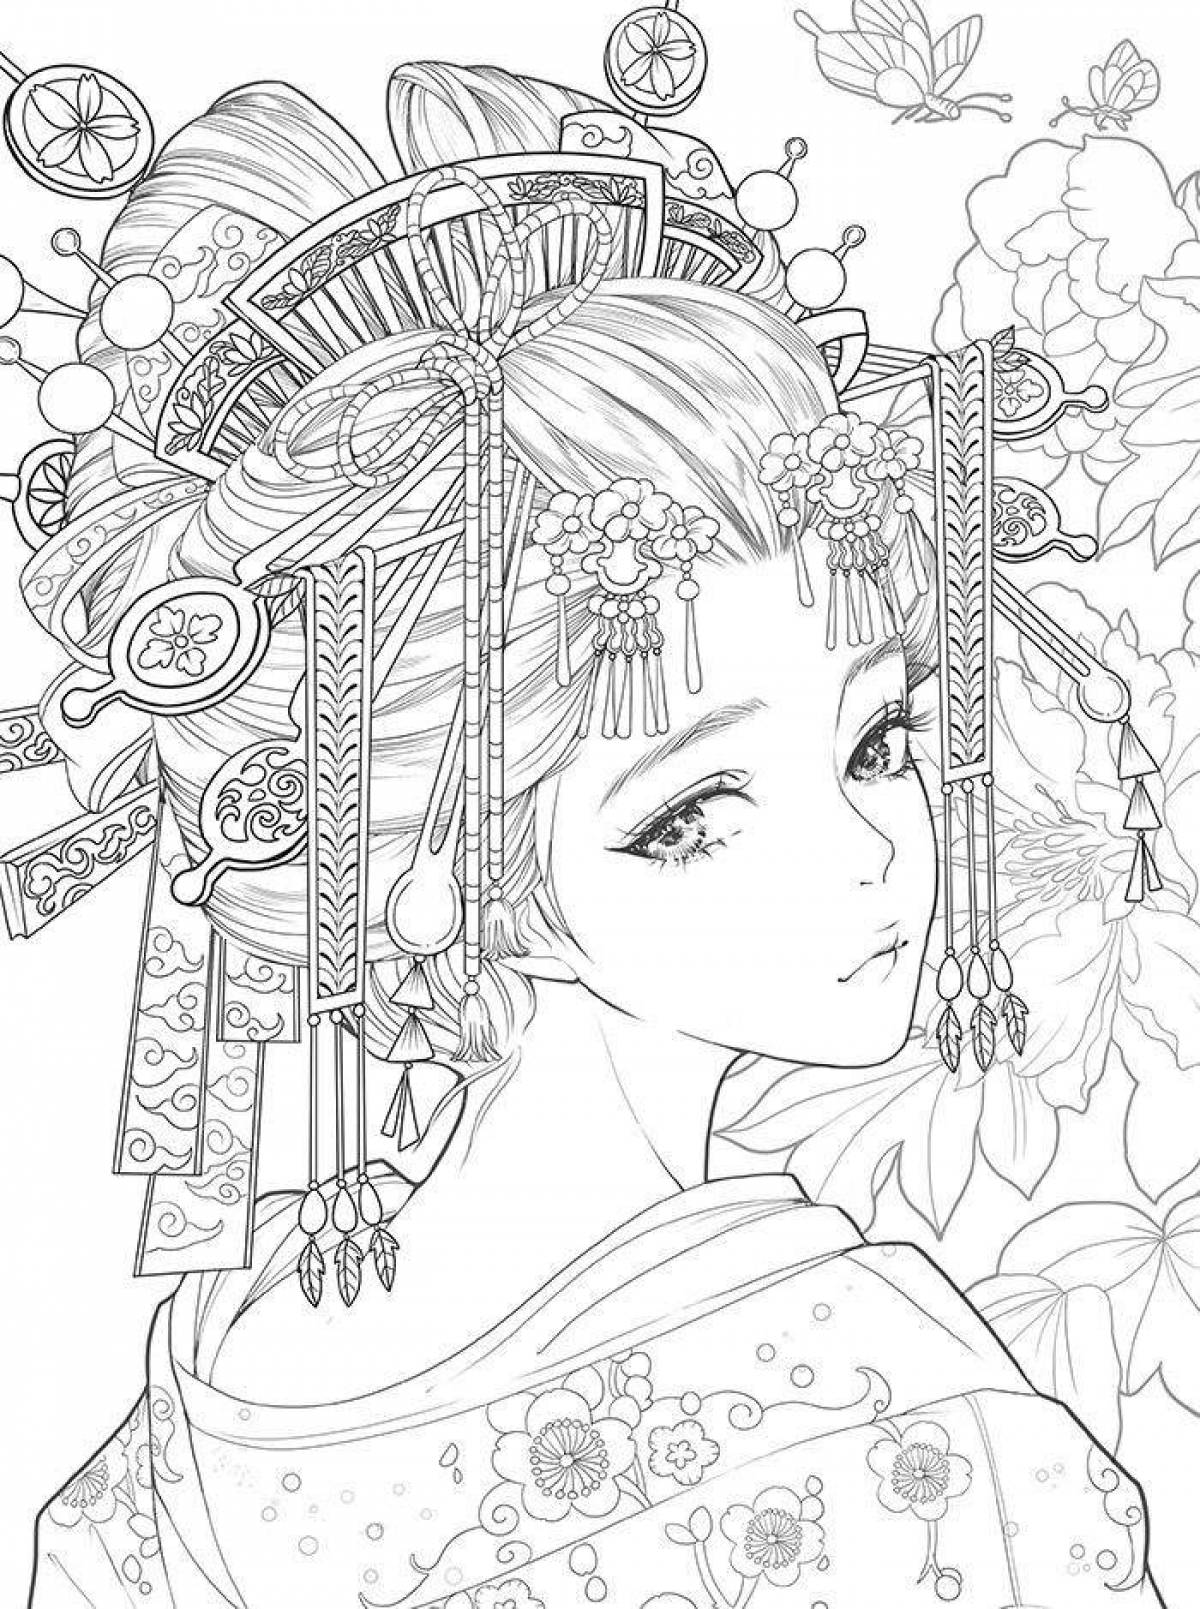 Animated geisha coloring page